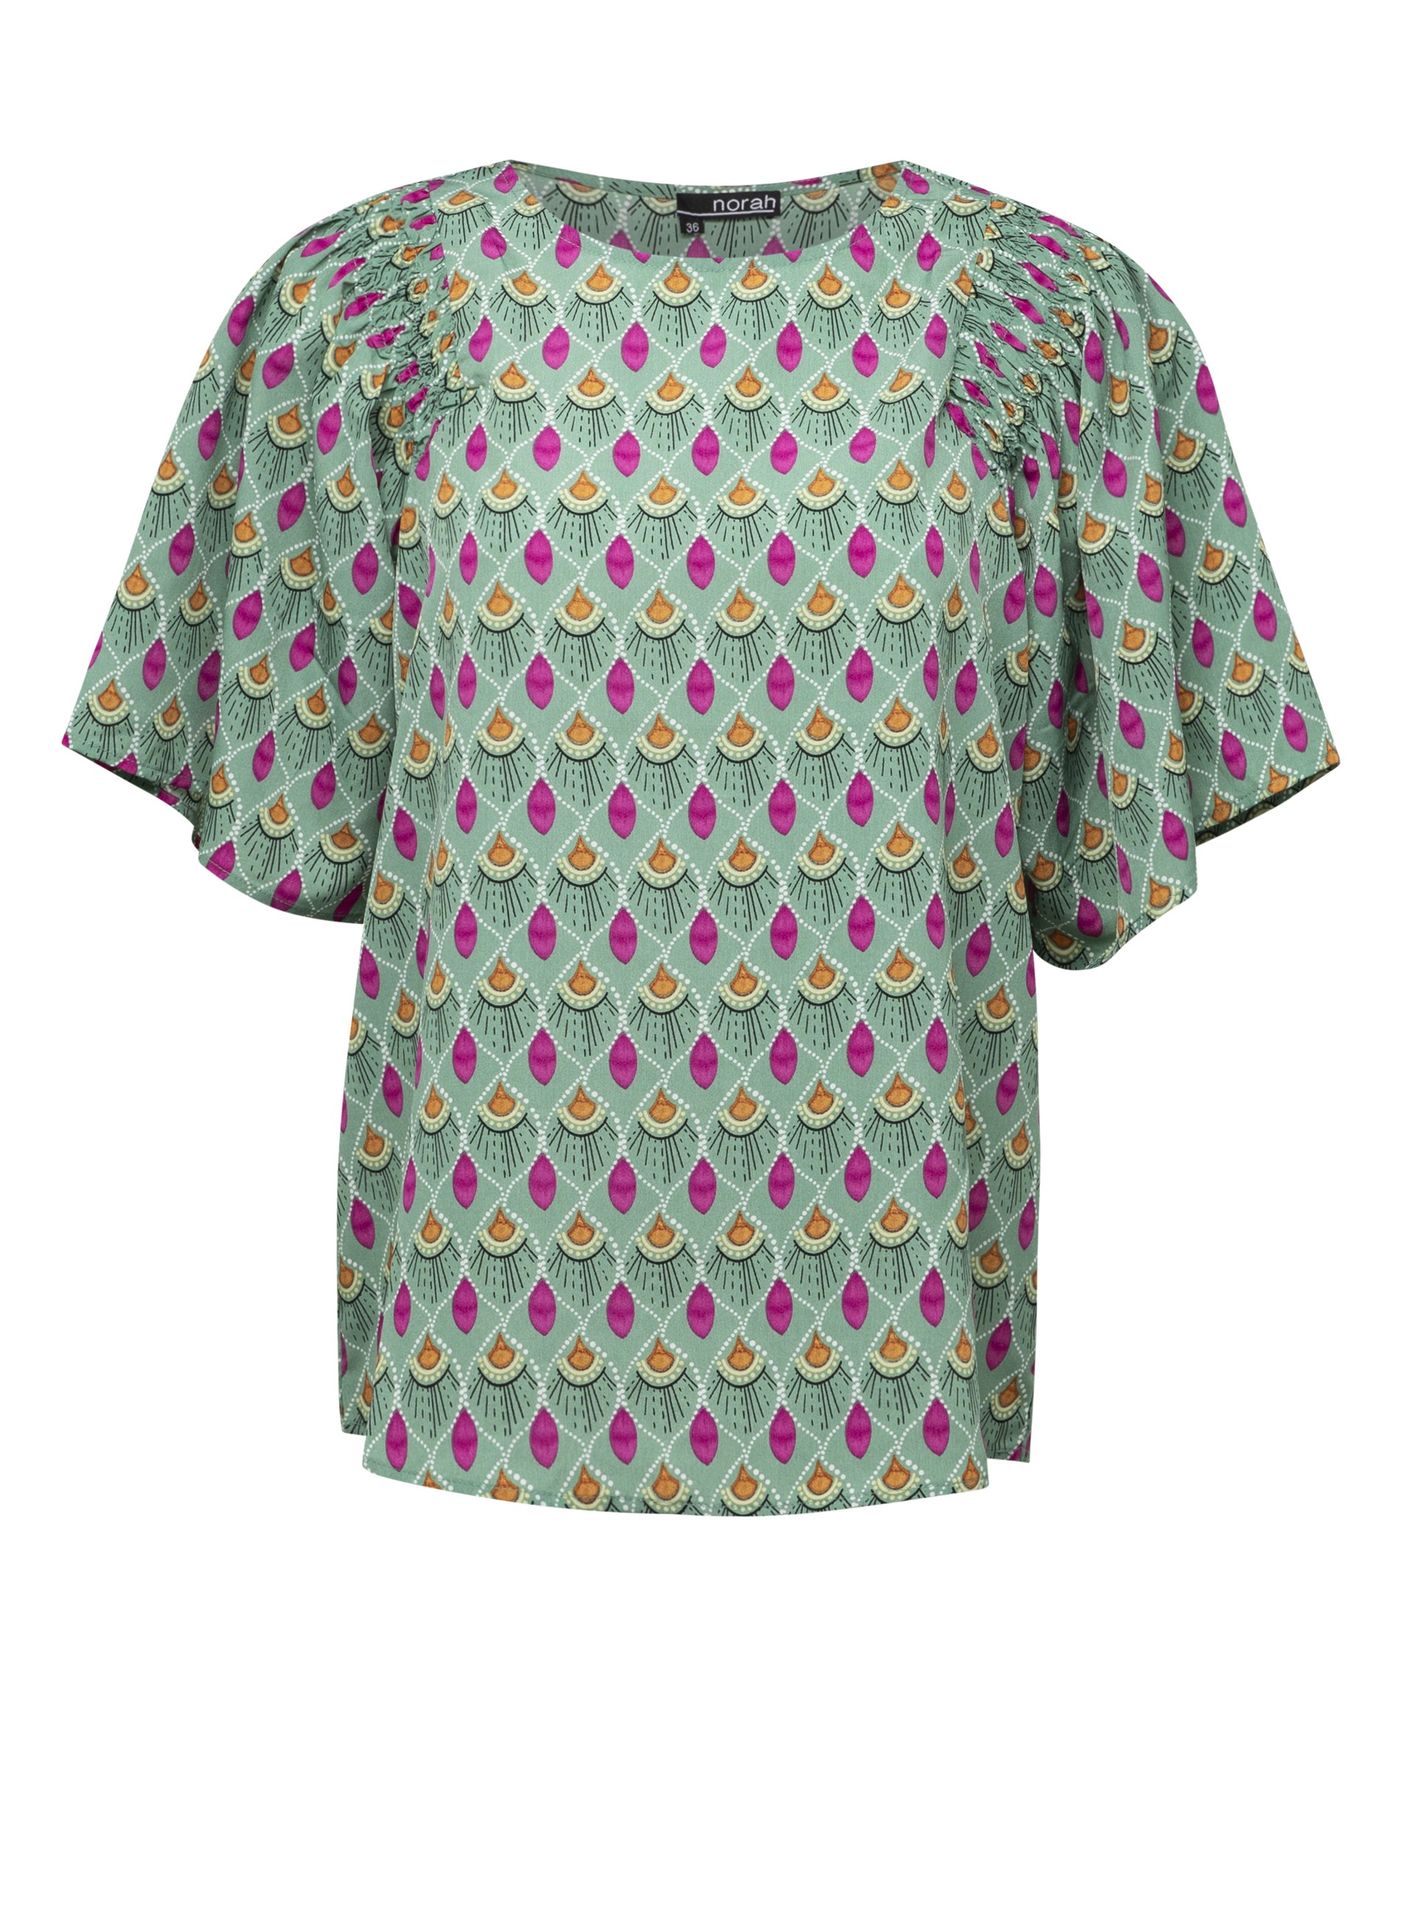 Norah Groene blouse green multicolor 213774-520